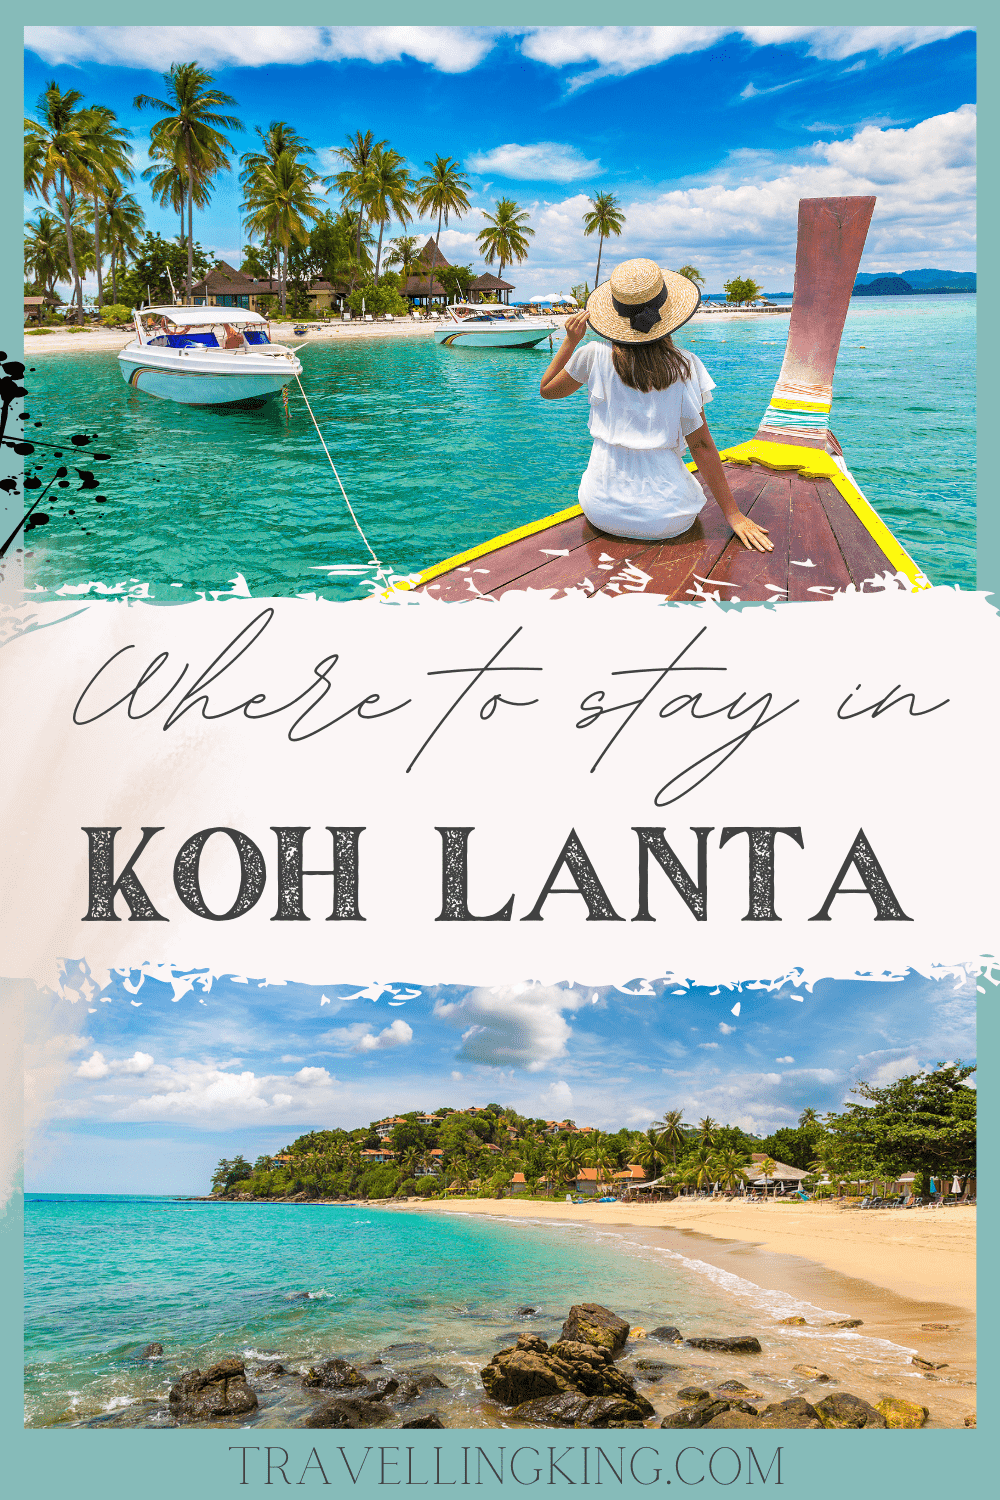 Where to Stay in Koh Lanta